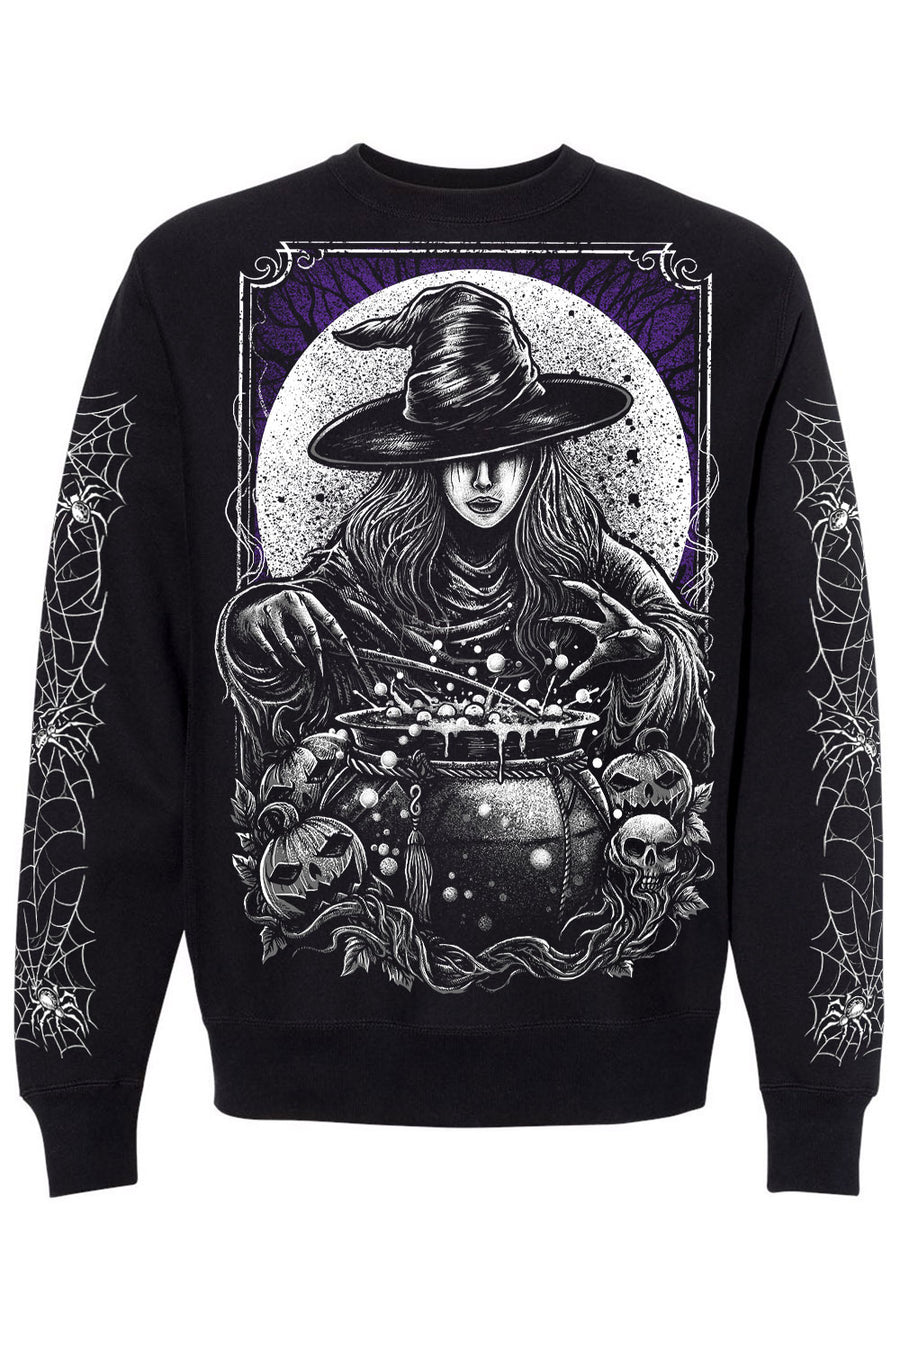 goth witch sweater